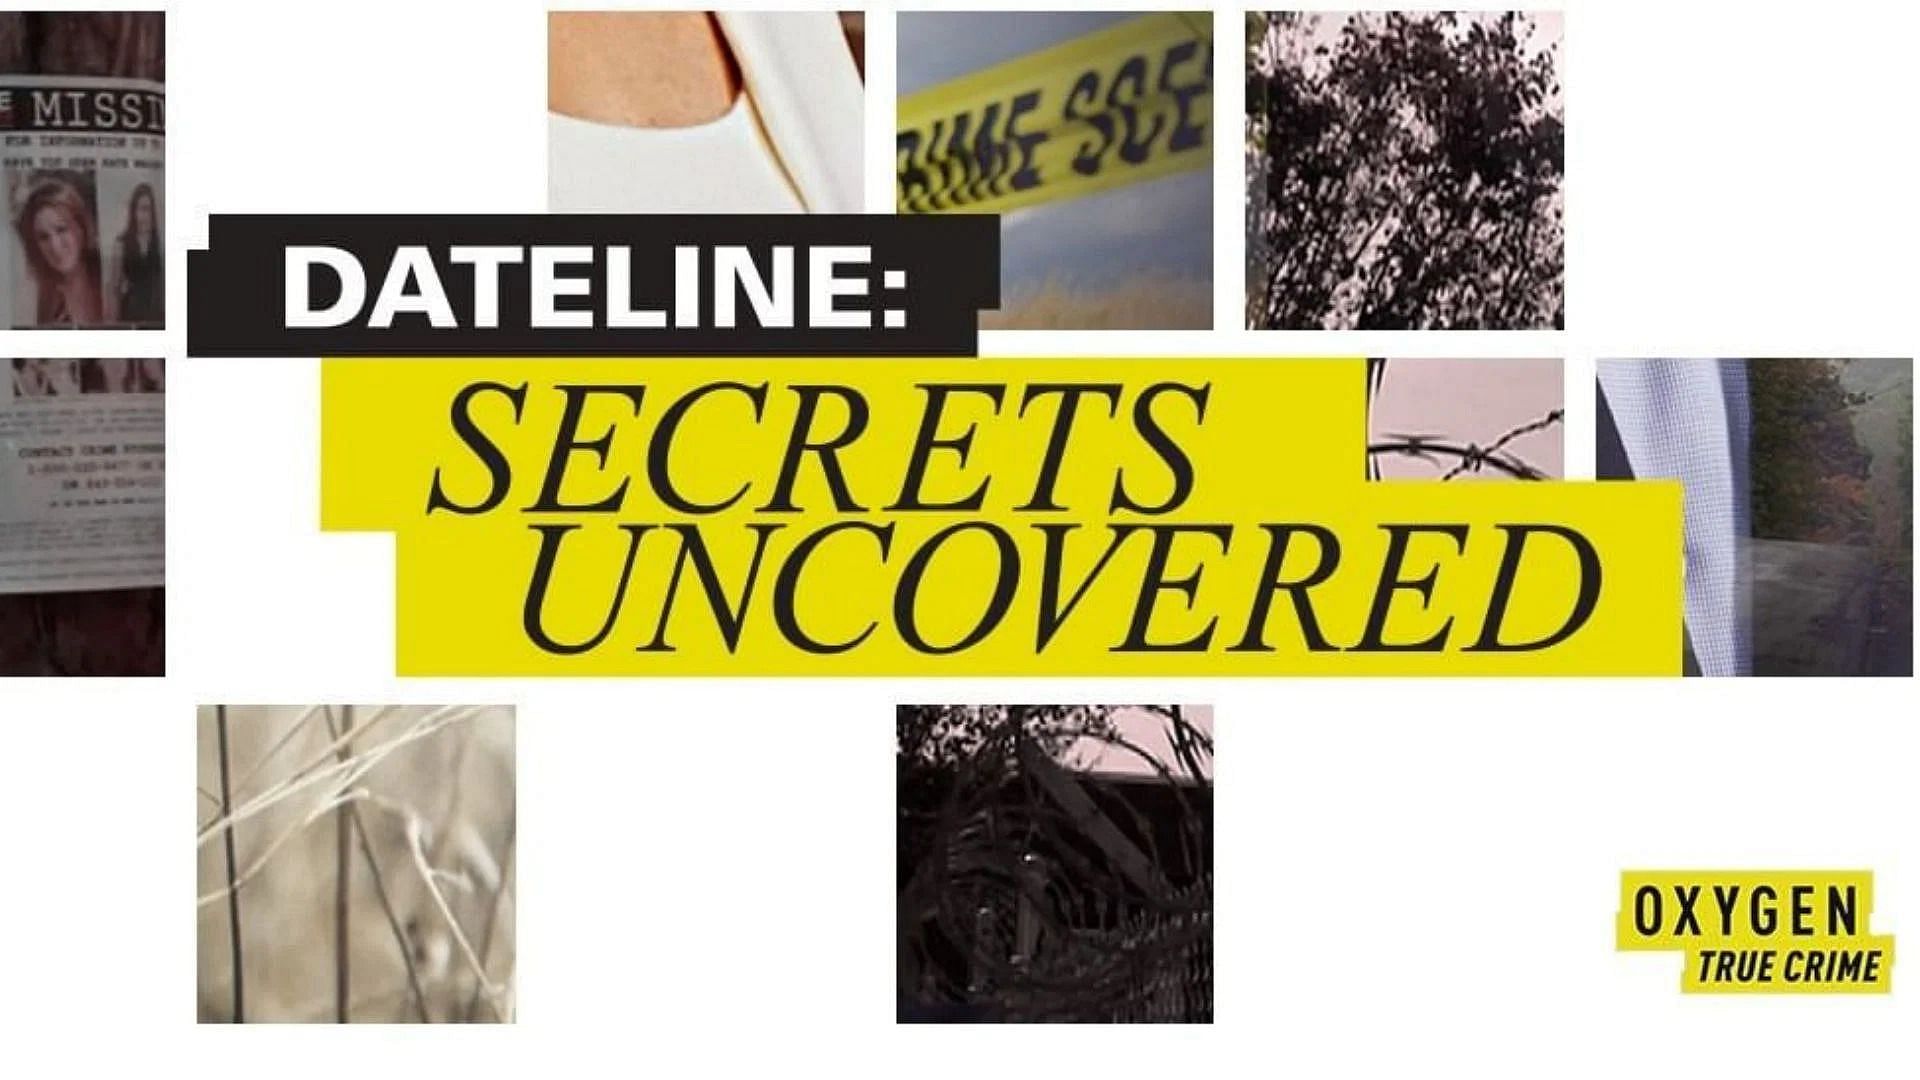 Dateline: Secrets Uncovered (Image via Oxygen/Instagram)